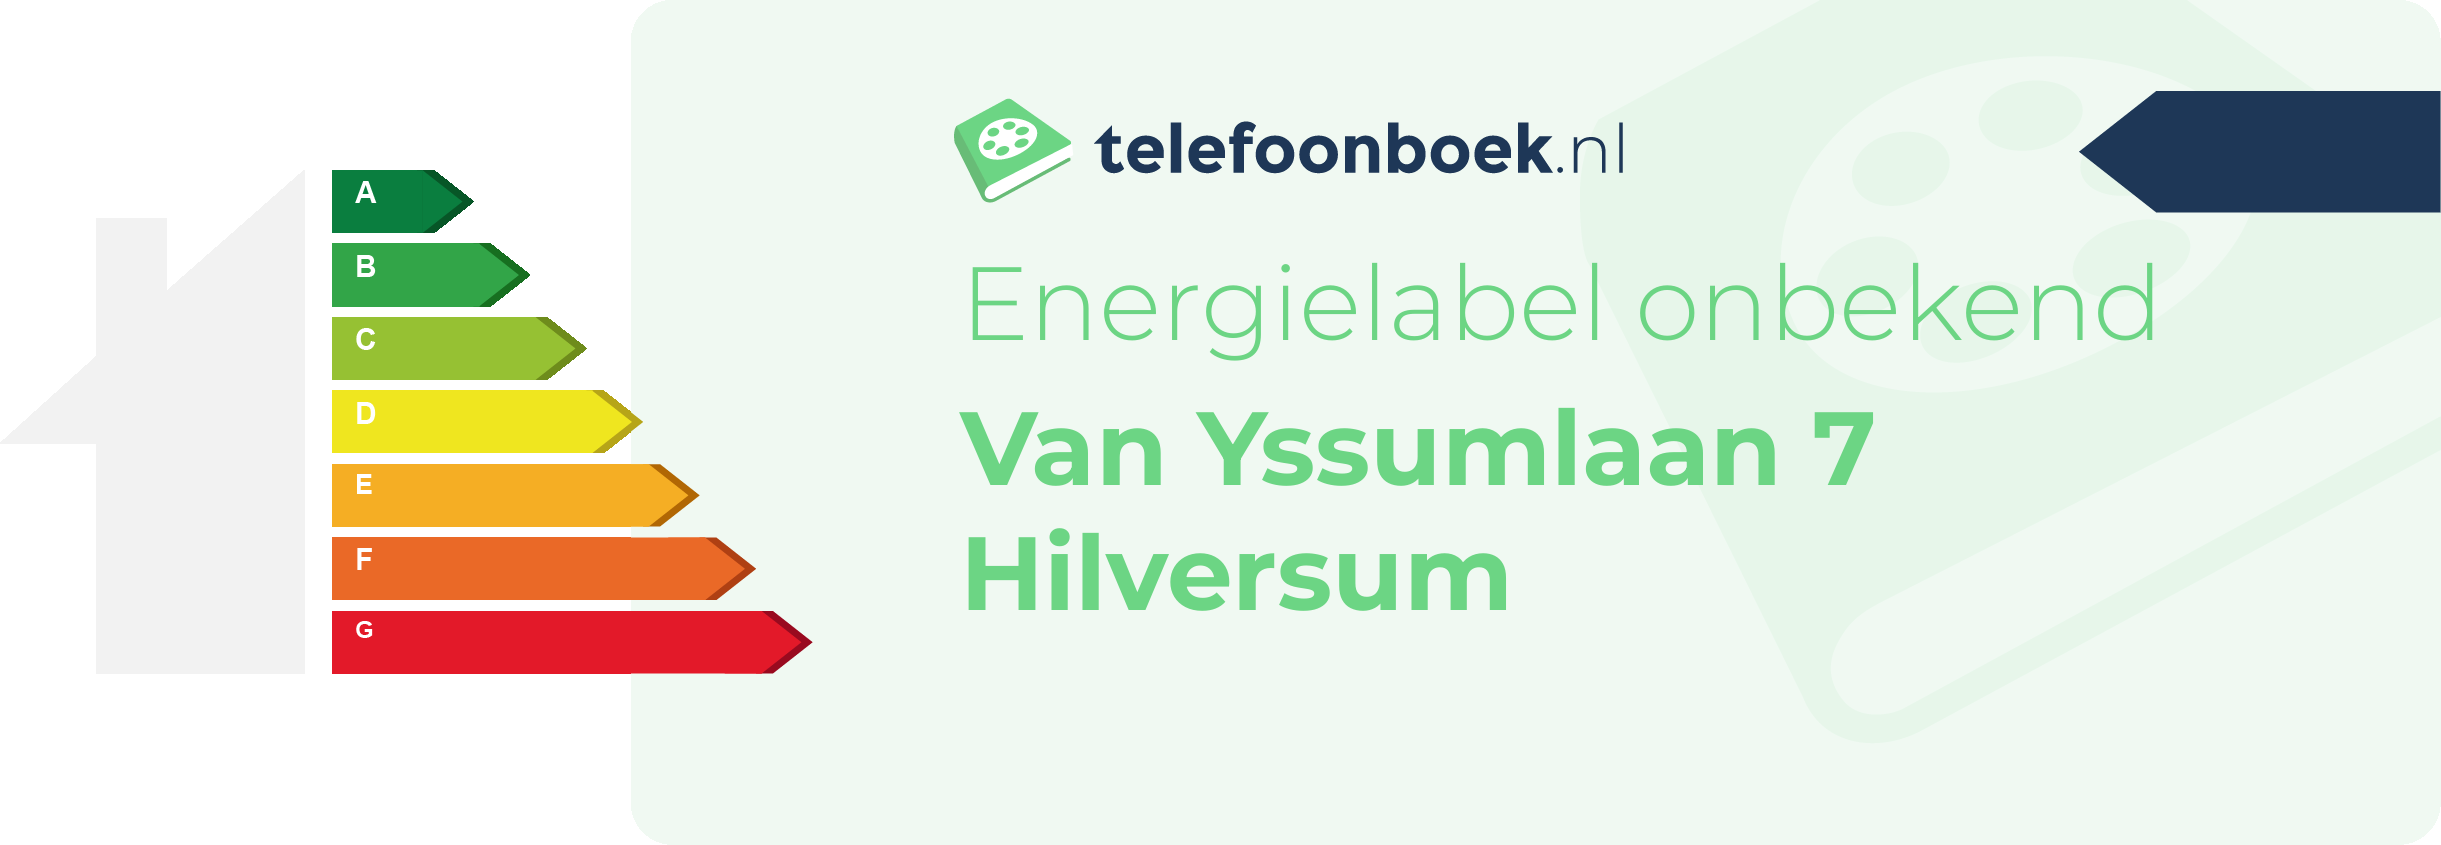 Energielabel Van Yssumlaan 7 Hilversum